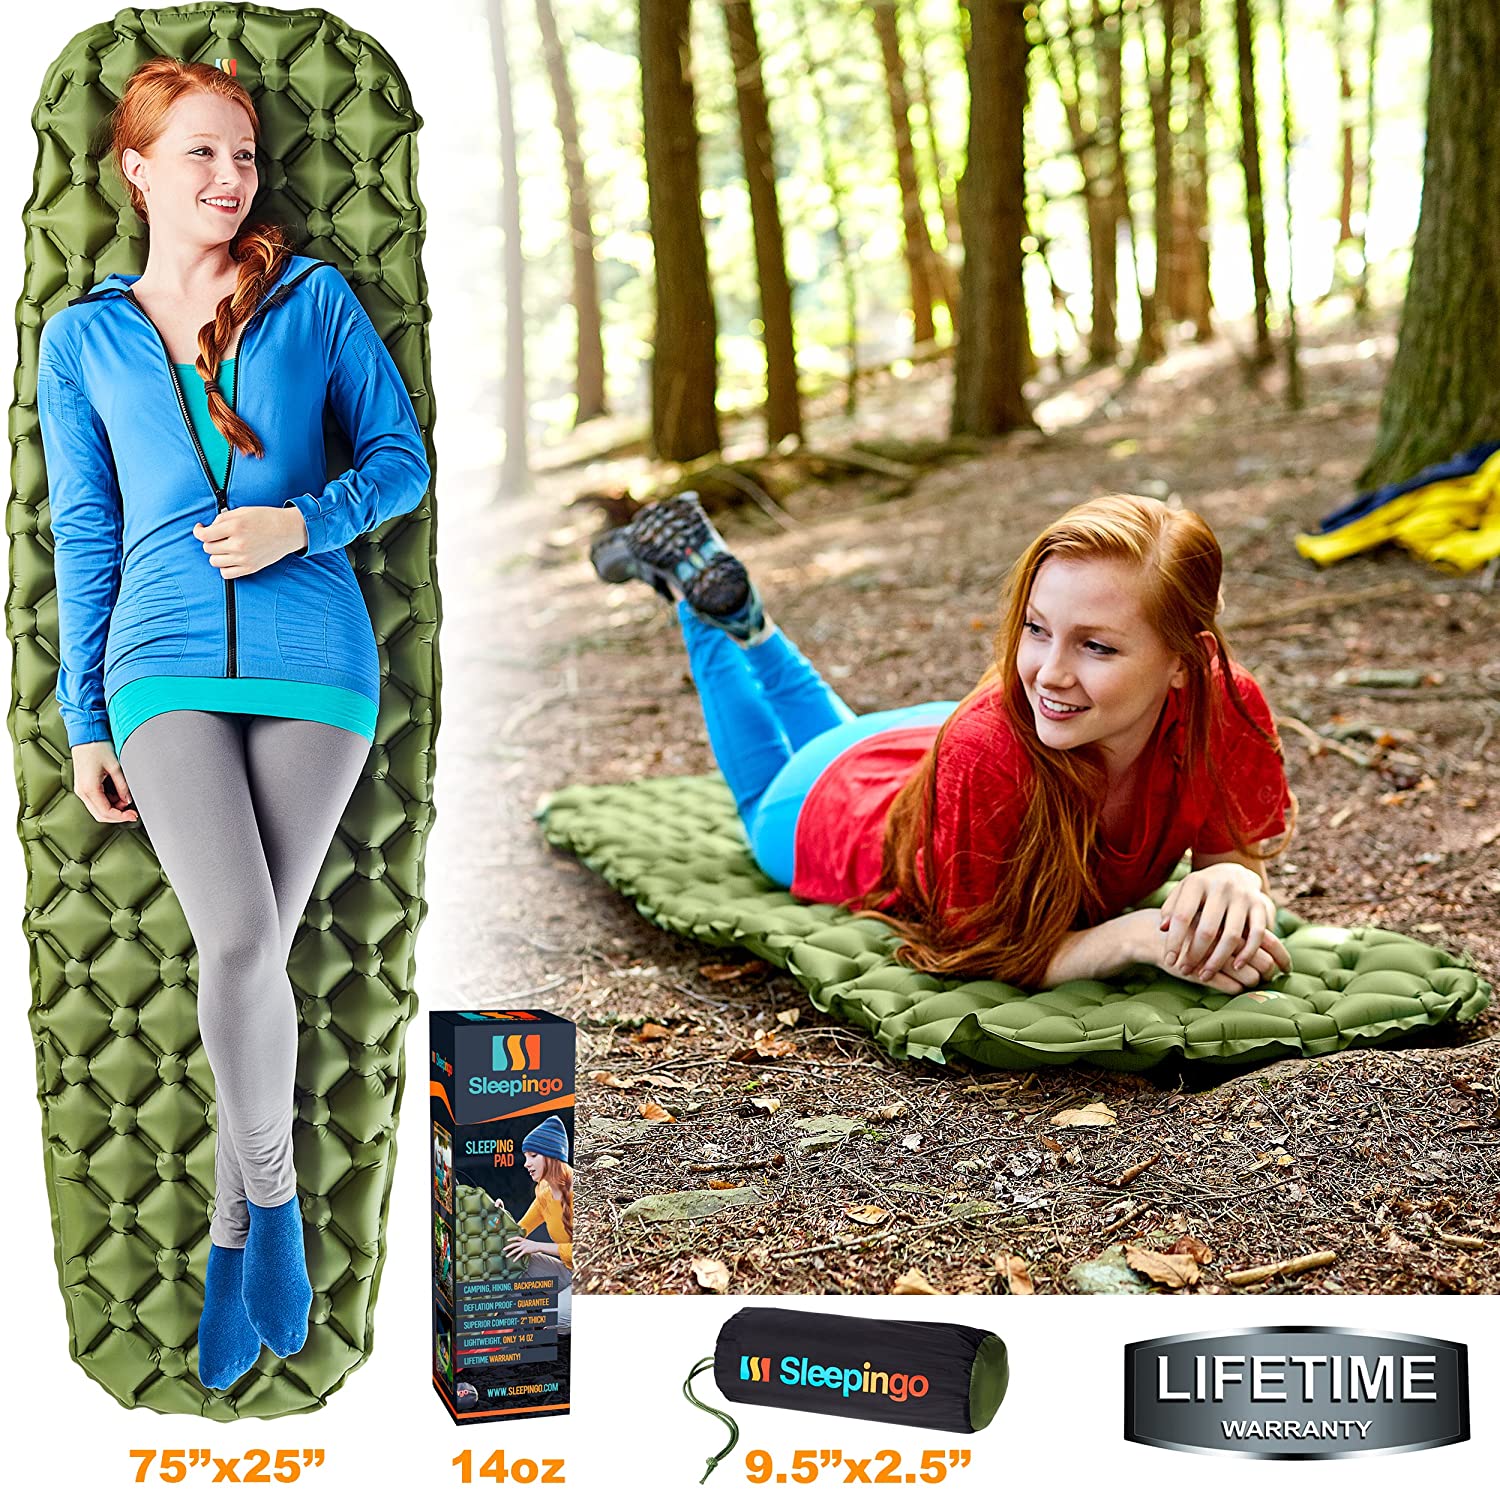 Sleepingo Camping Sleeping Pad - Mat, (Large), Ultralight 14.5 OZ, Best Sleeping Pads for Backpacking, Hiking Air Mattress - Lightweight, Inflatable & Compact, Camp Sleep Pad - image 3 of 7